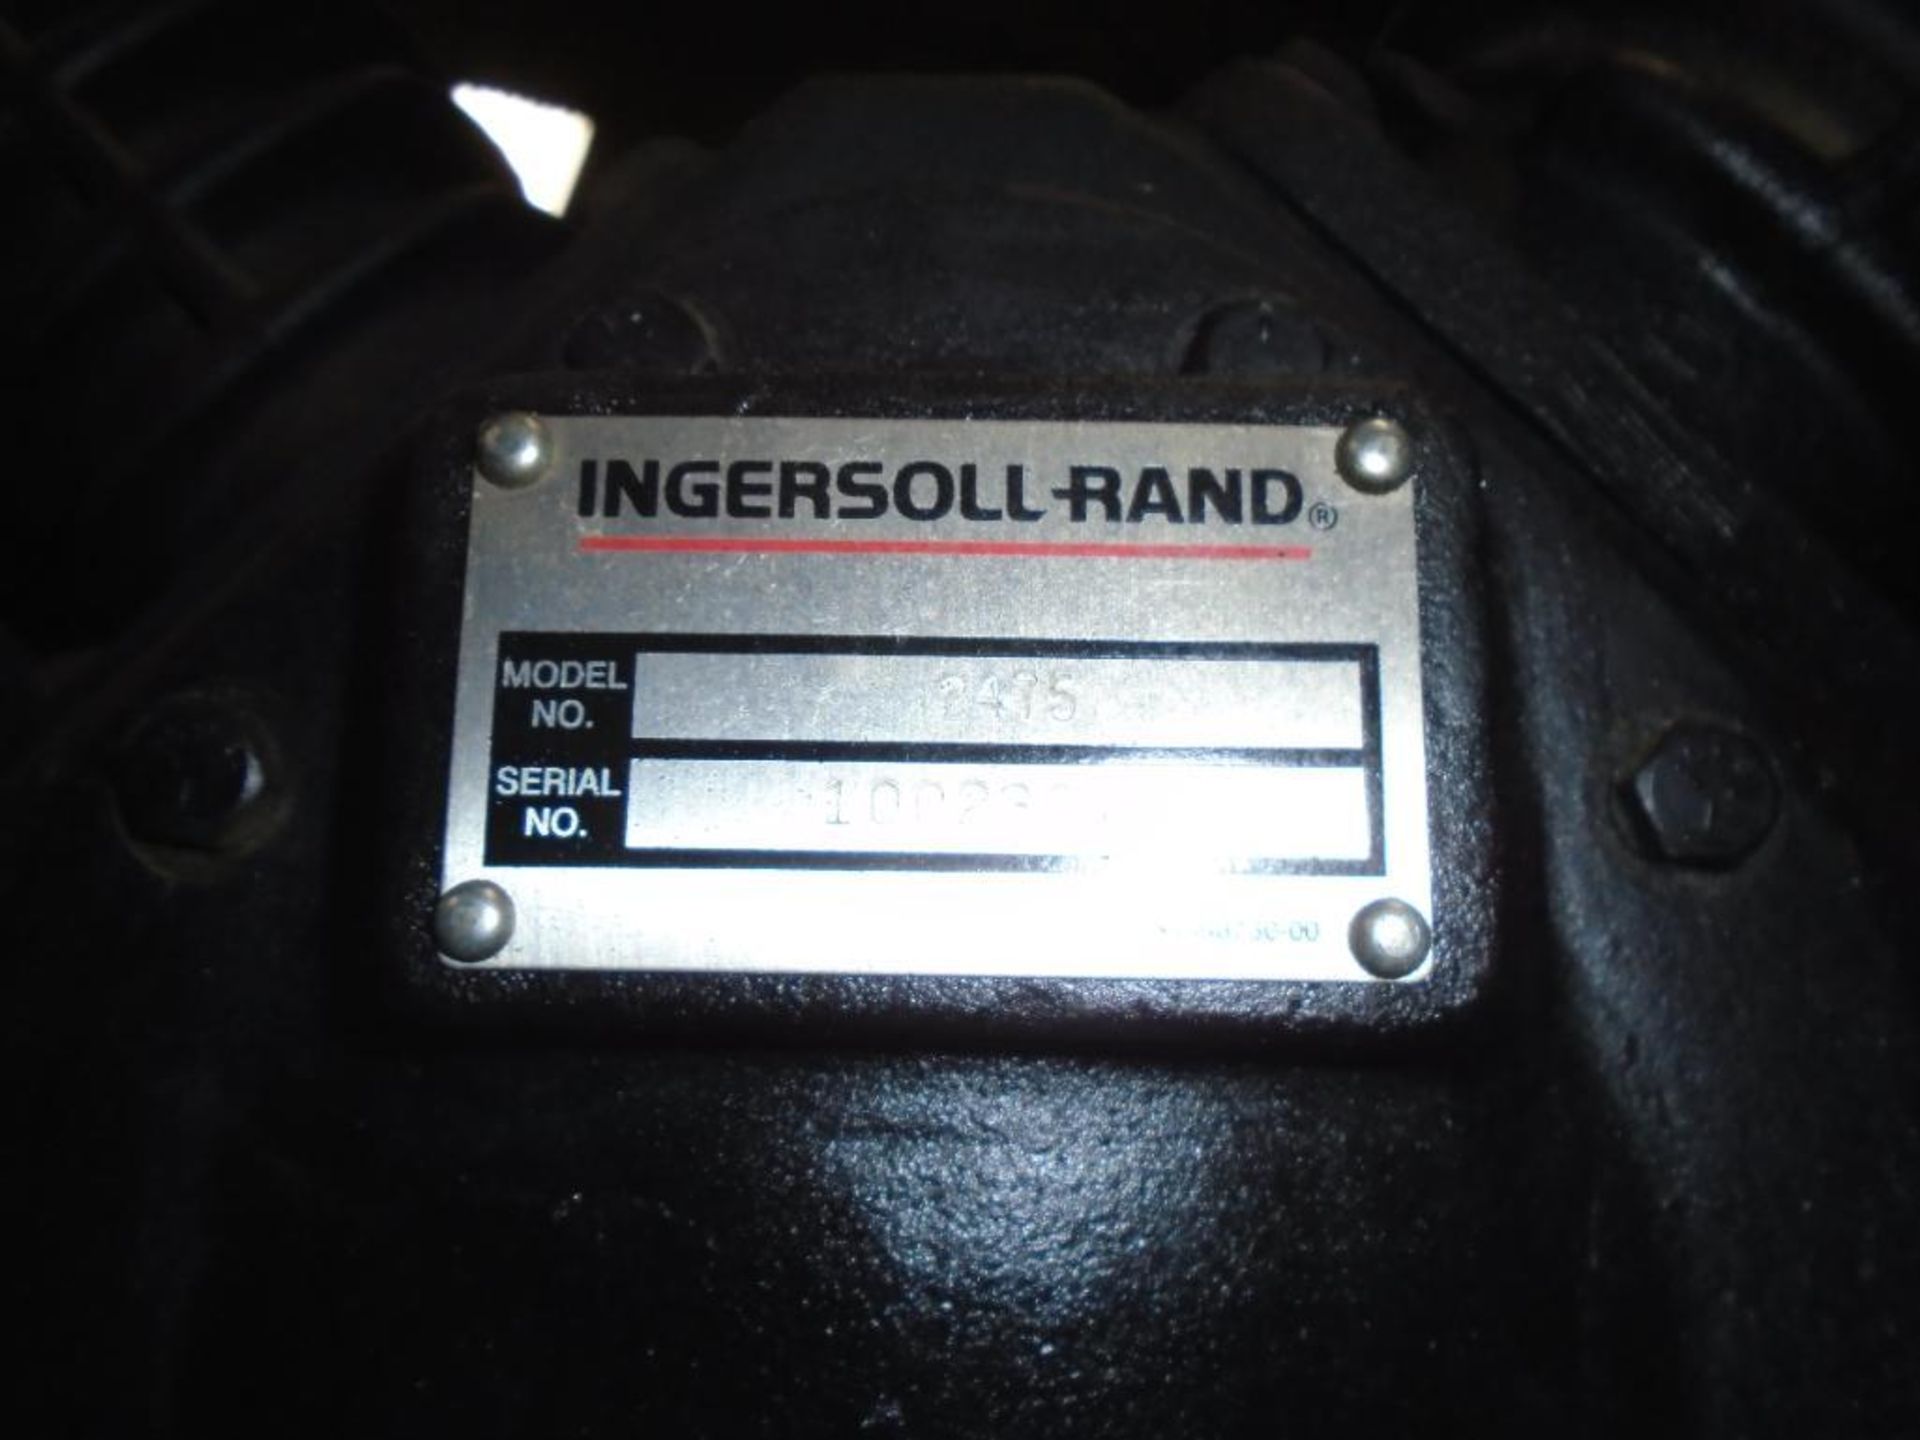 Ingersoll Rand Model 2475N7 Air Compressor - Image 3 of 5